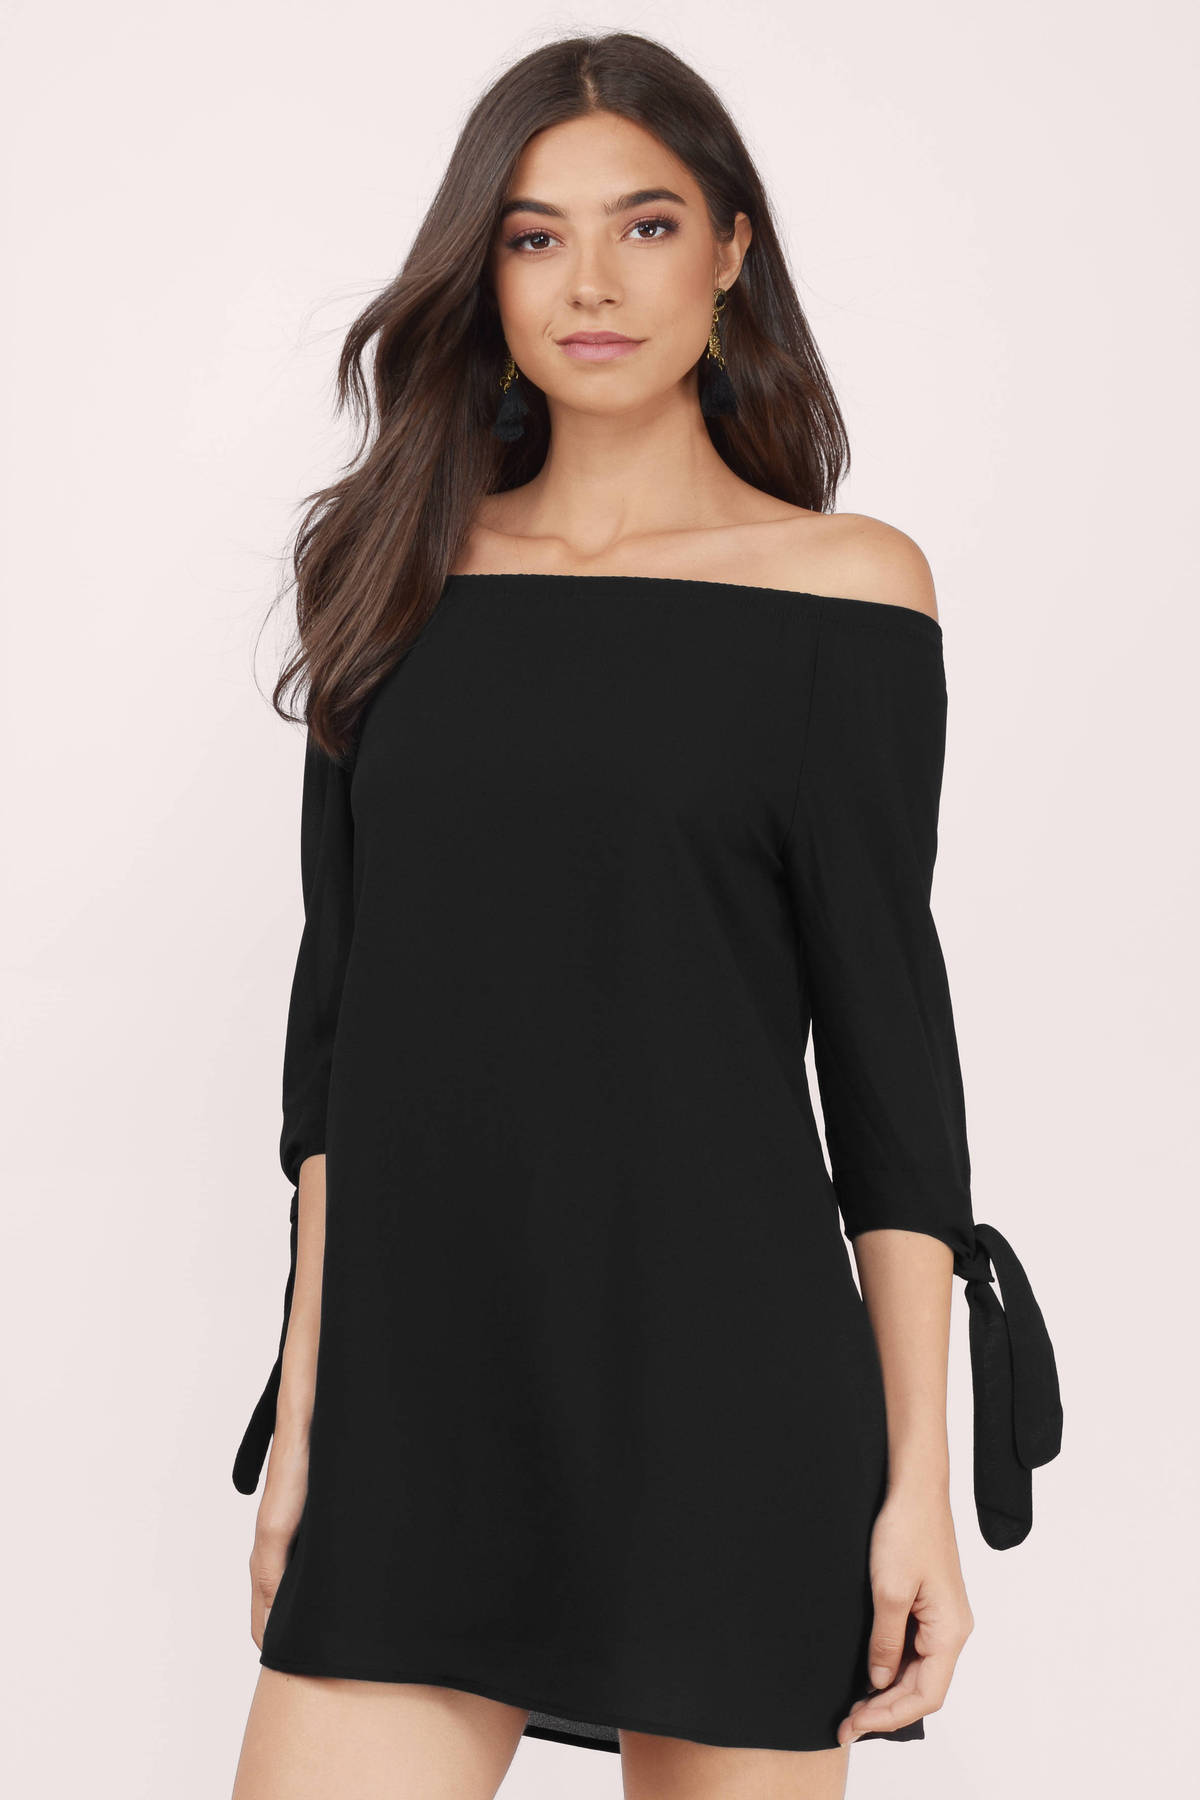 Miss Genial Off Shoulder Dress in Black - $8 | Tobi US